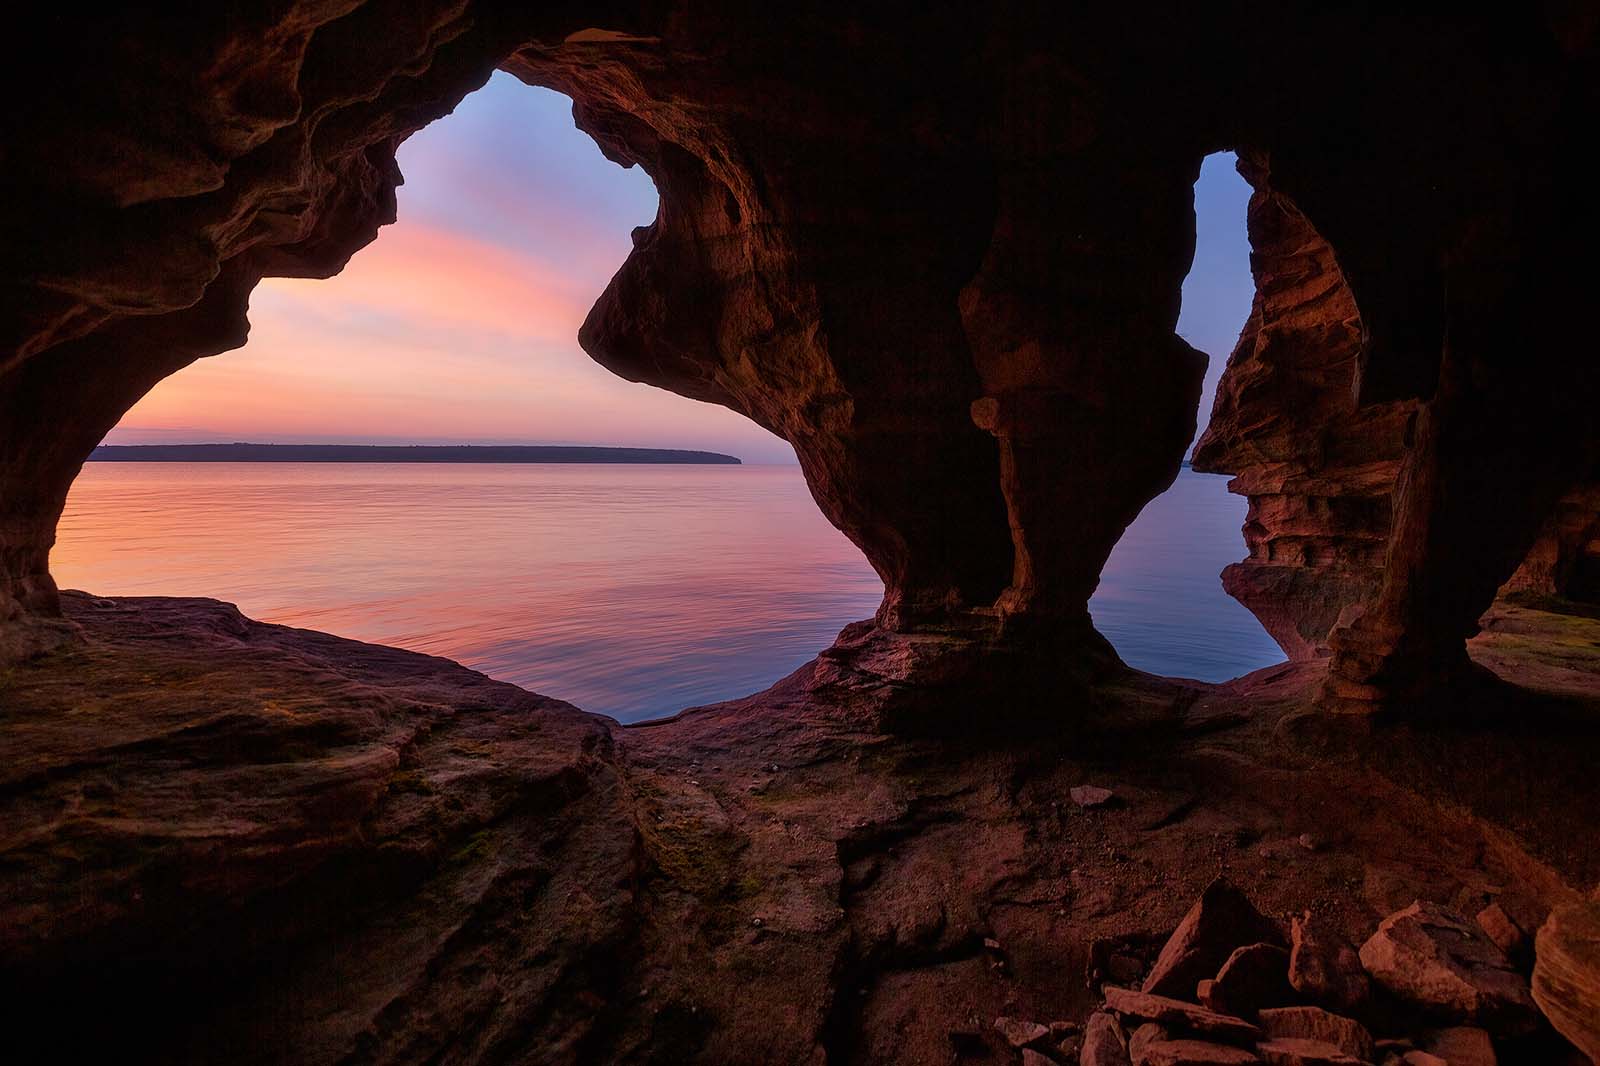 sunrise from inside a sea cave on oak island in the apostle islands